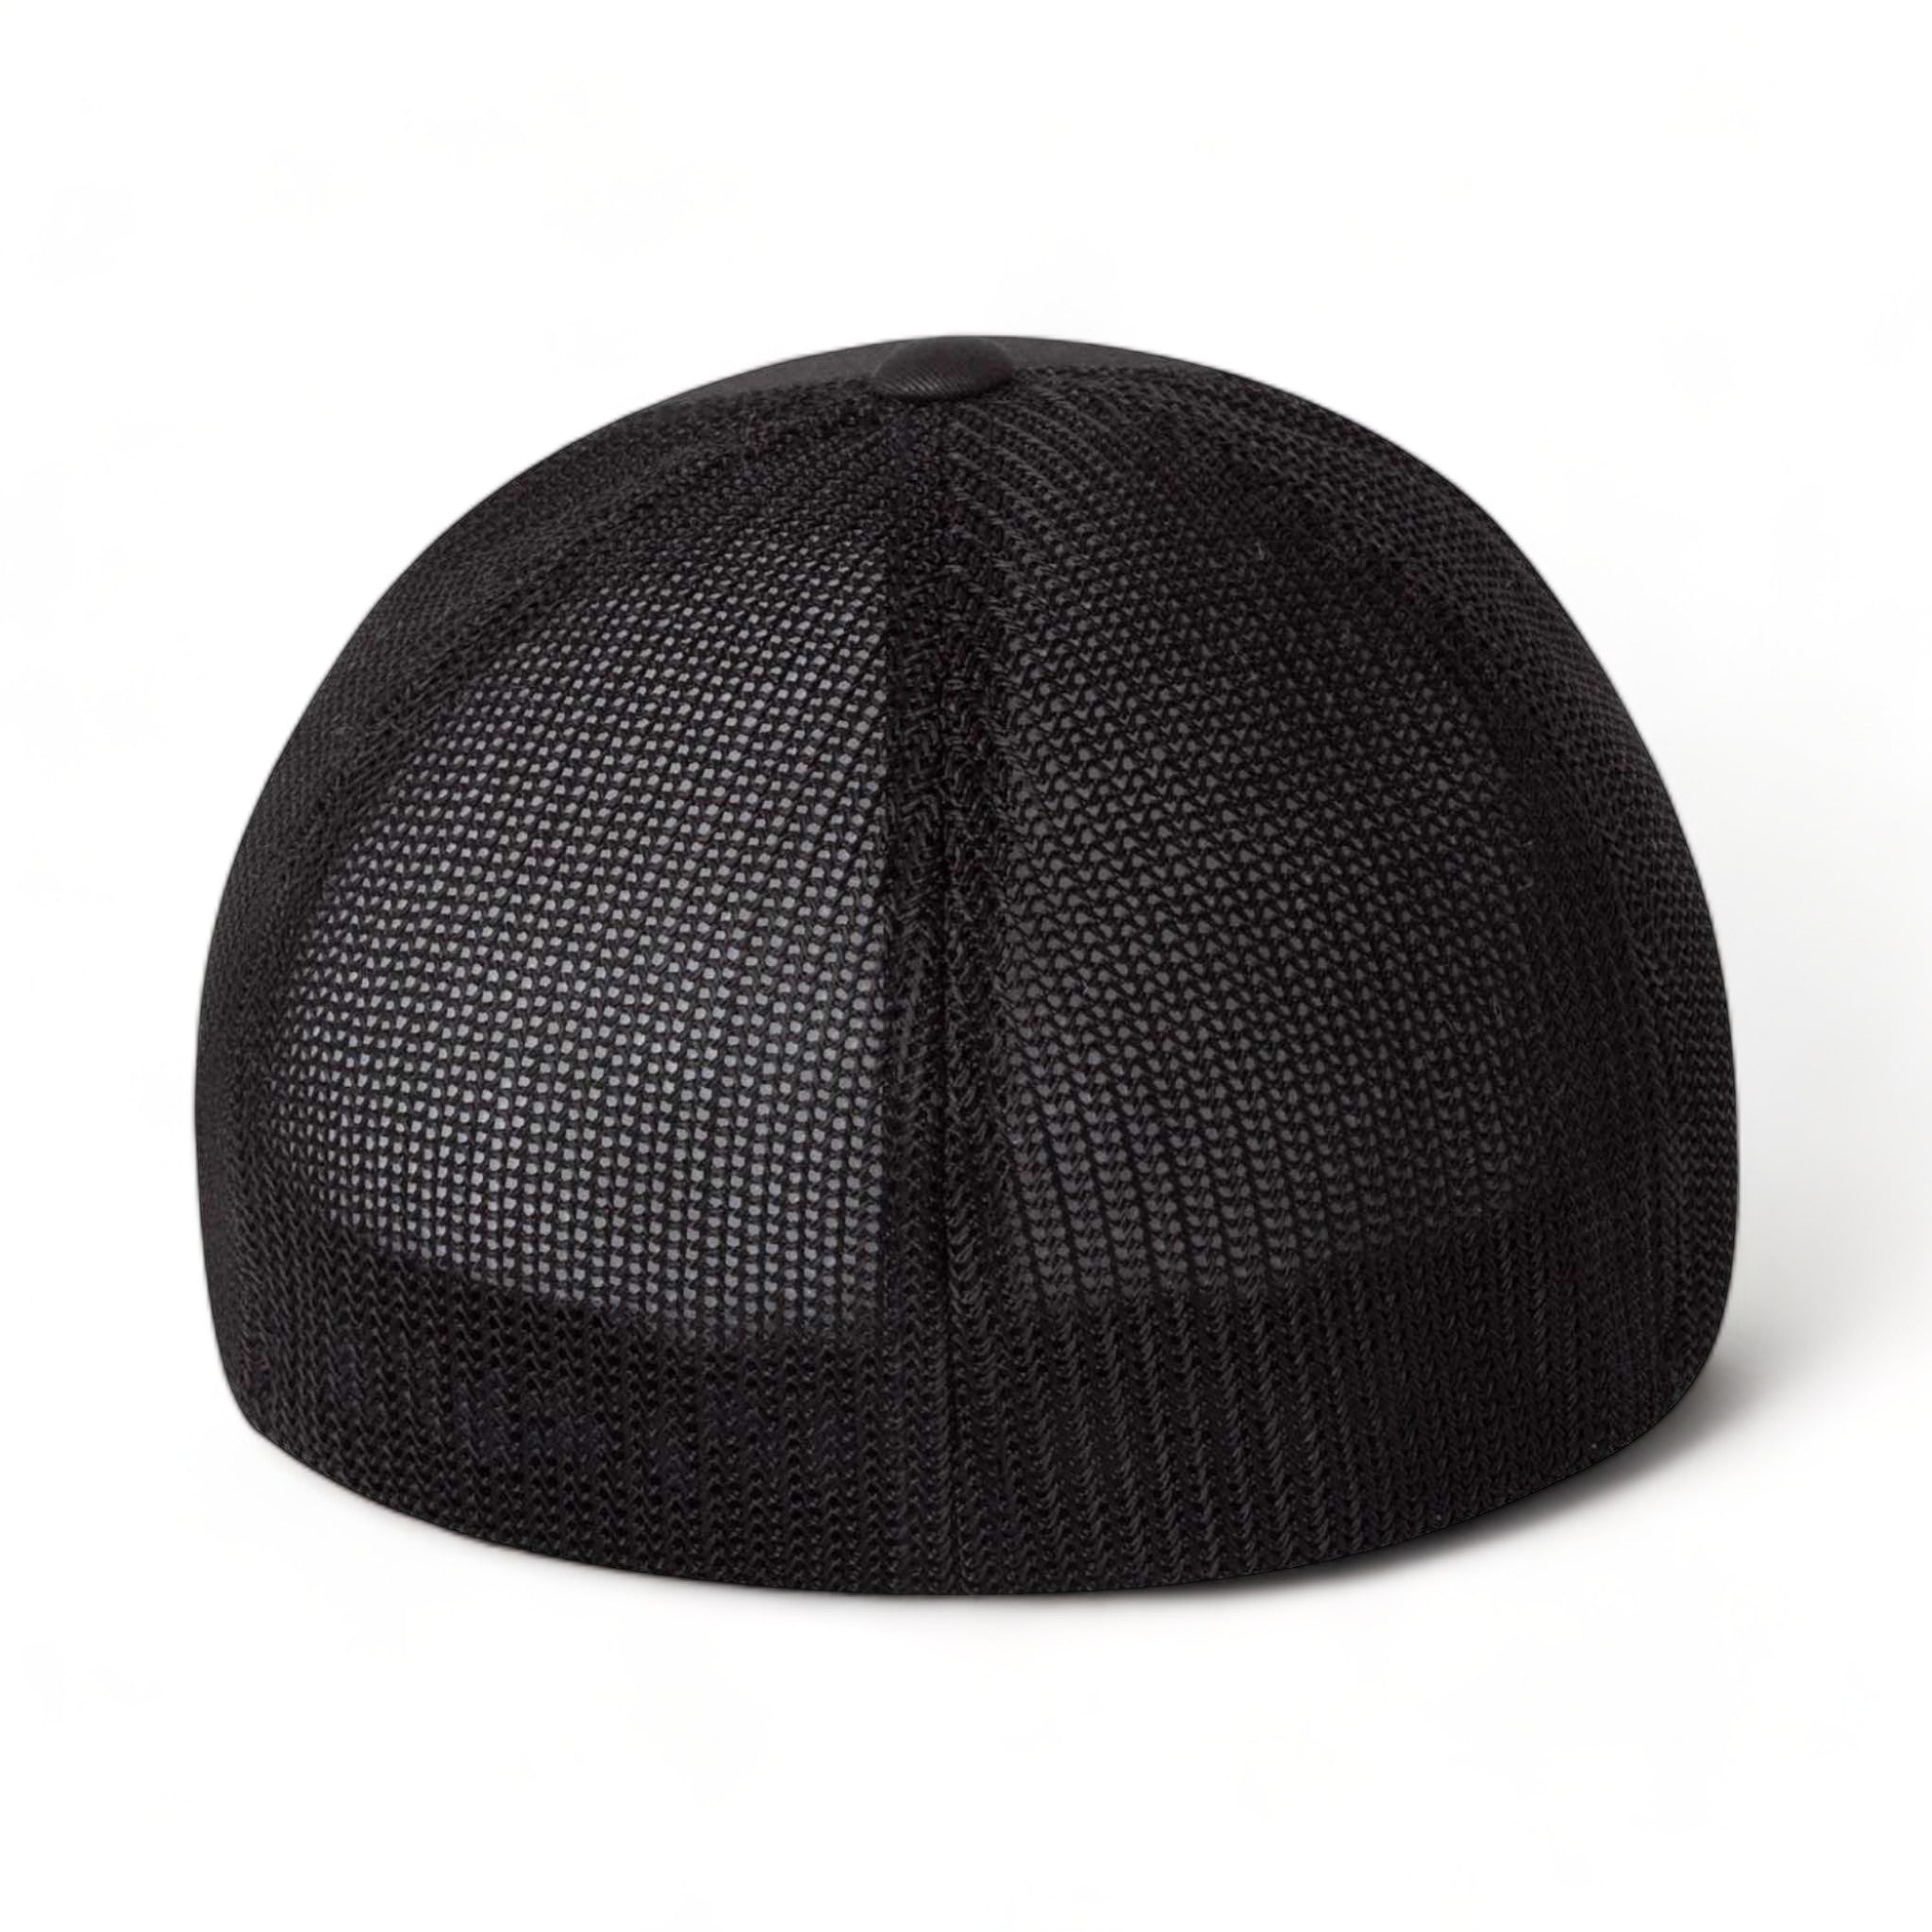 Back view of Flexfit 6511 custom hat in black